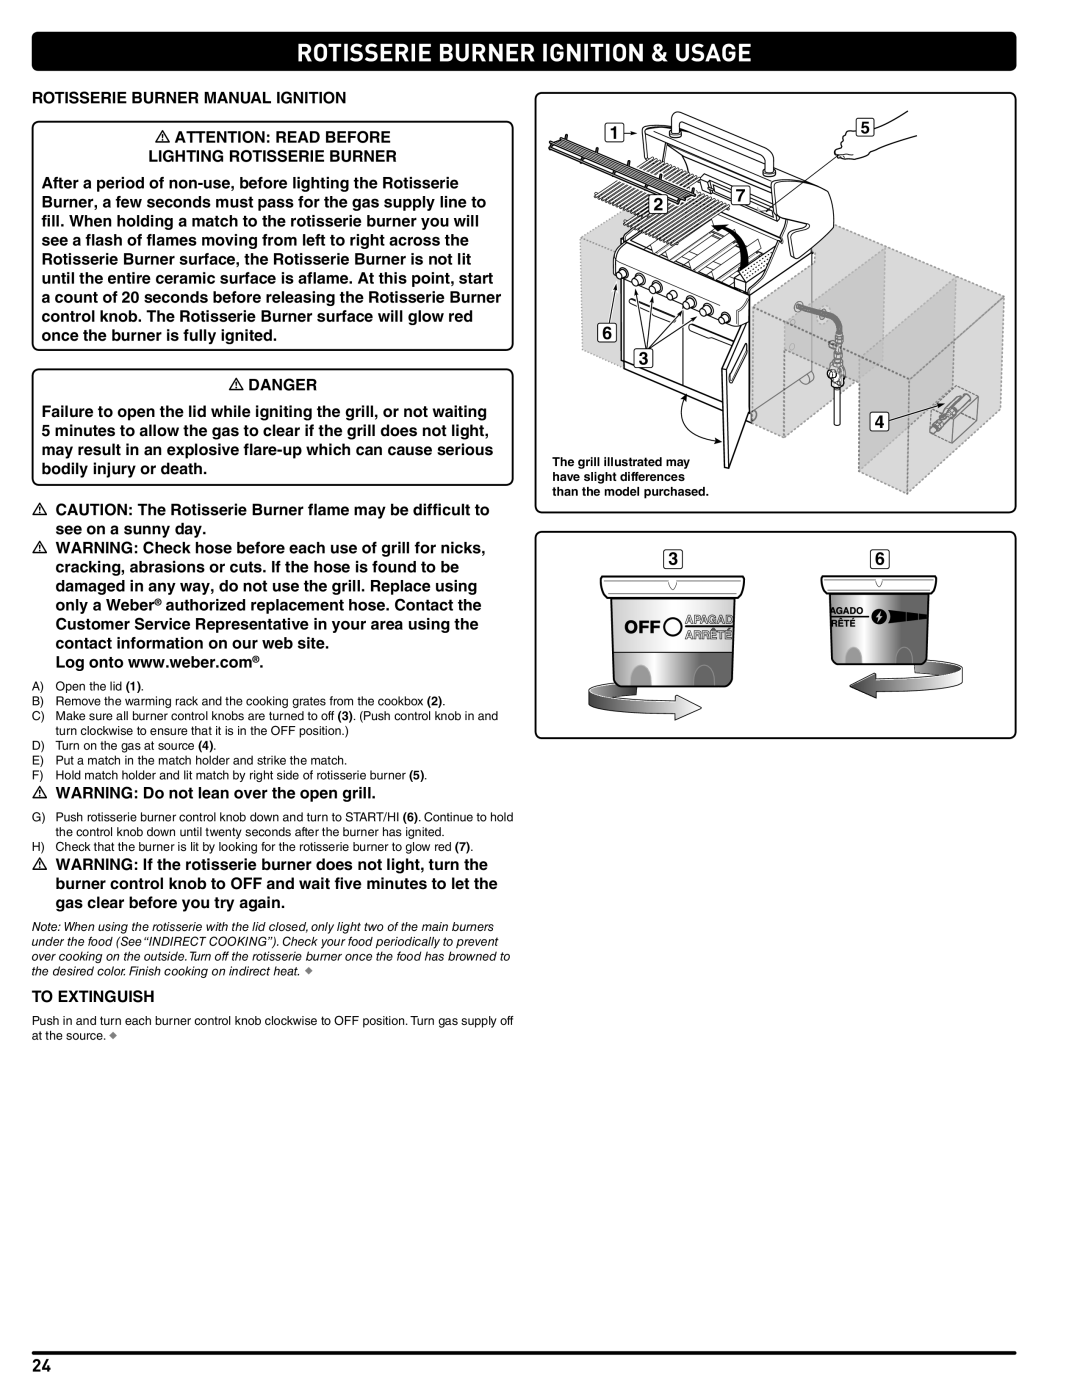 Weber Summit Gas Grill, 56576 manual Rotisserie Burner Ignition & Usage 